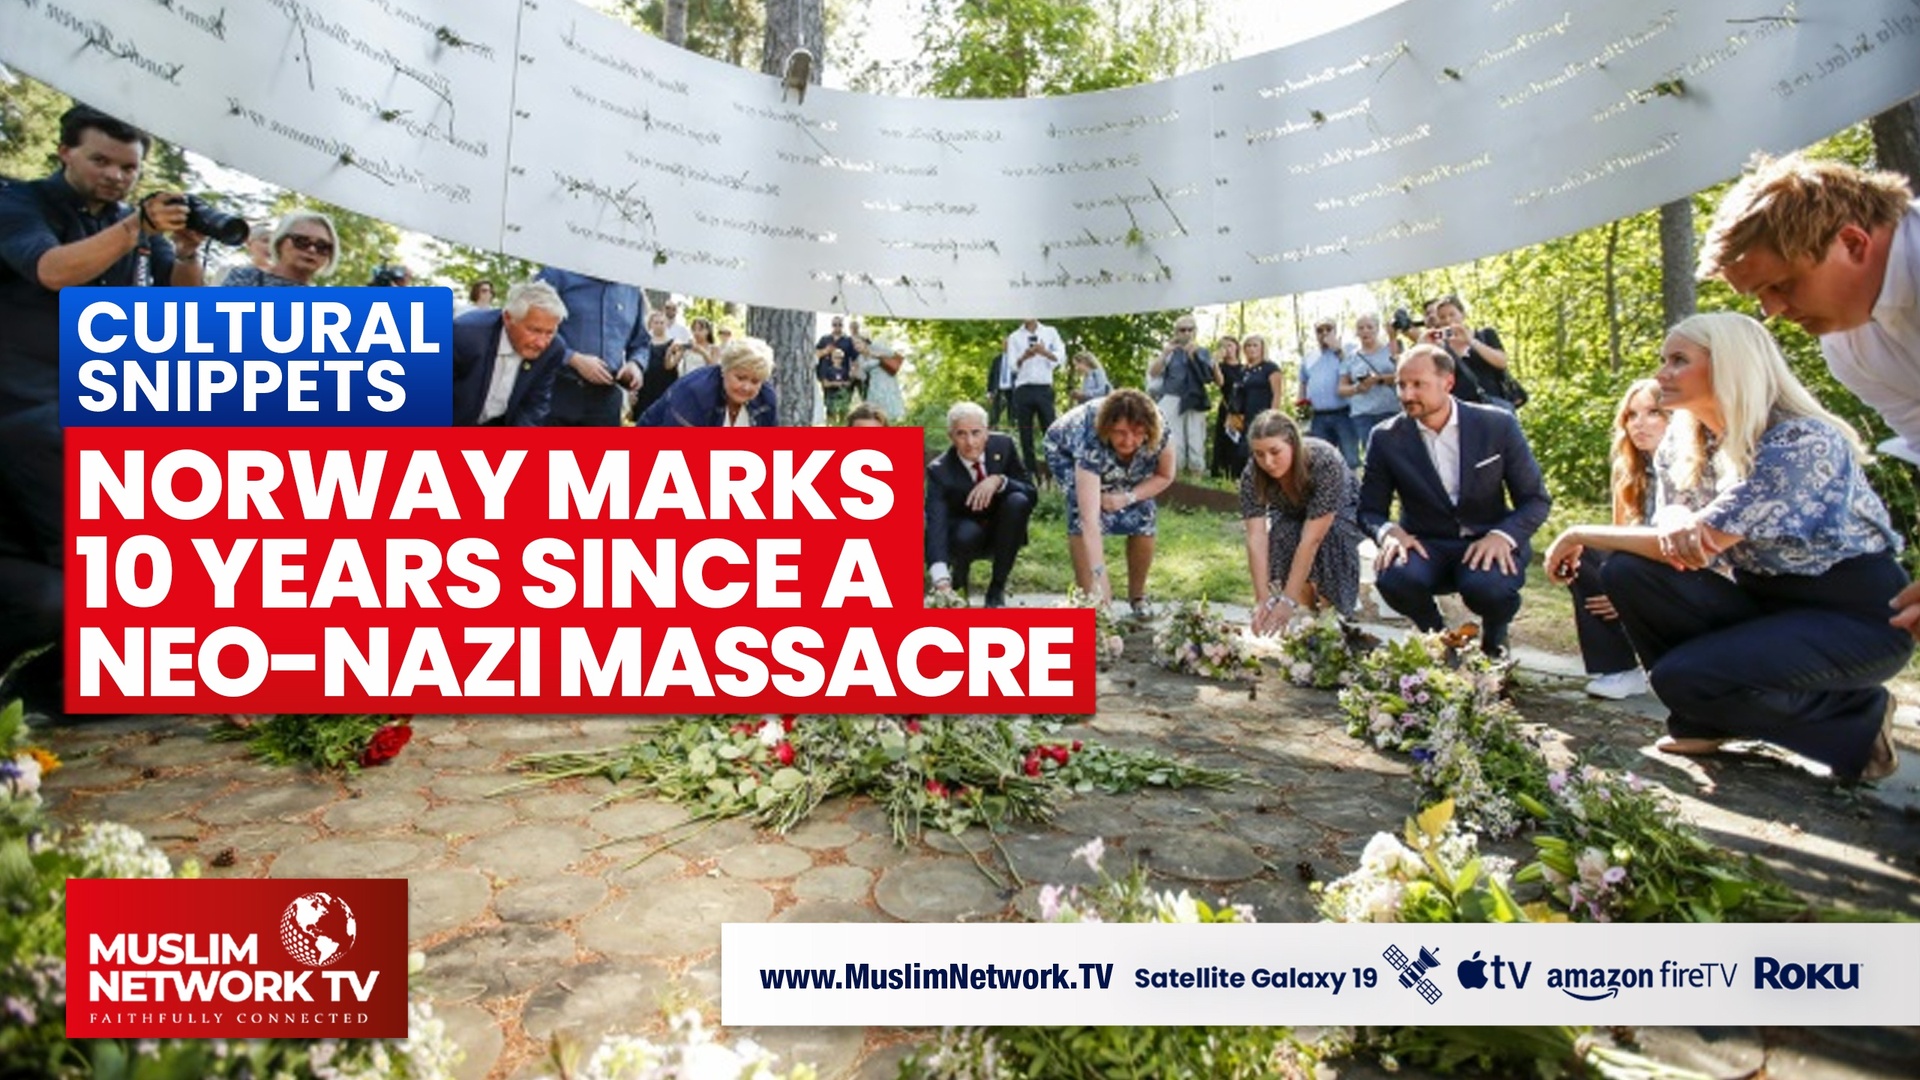 Norway Marks 10 Years Since a Neo-Nazi Massacre